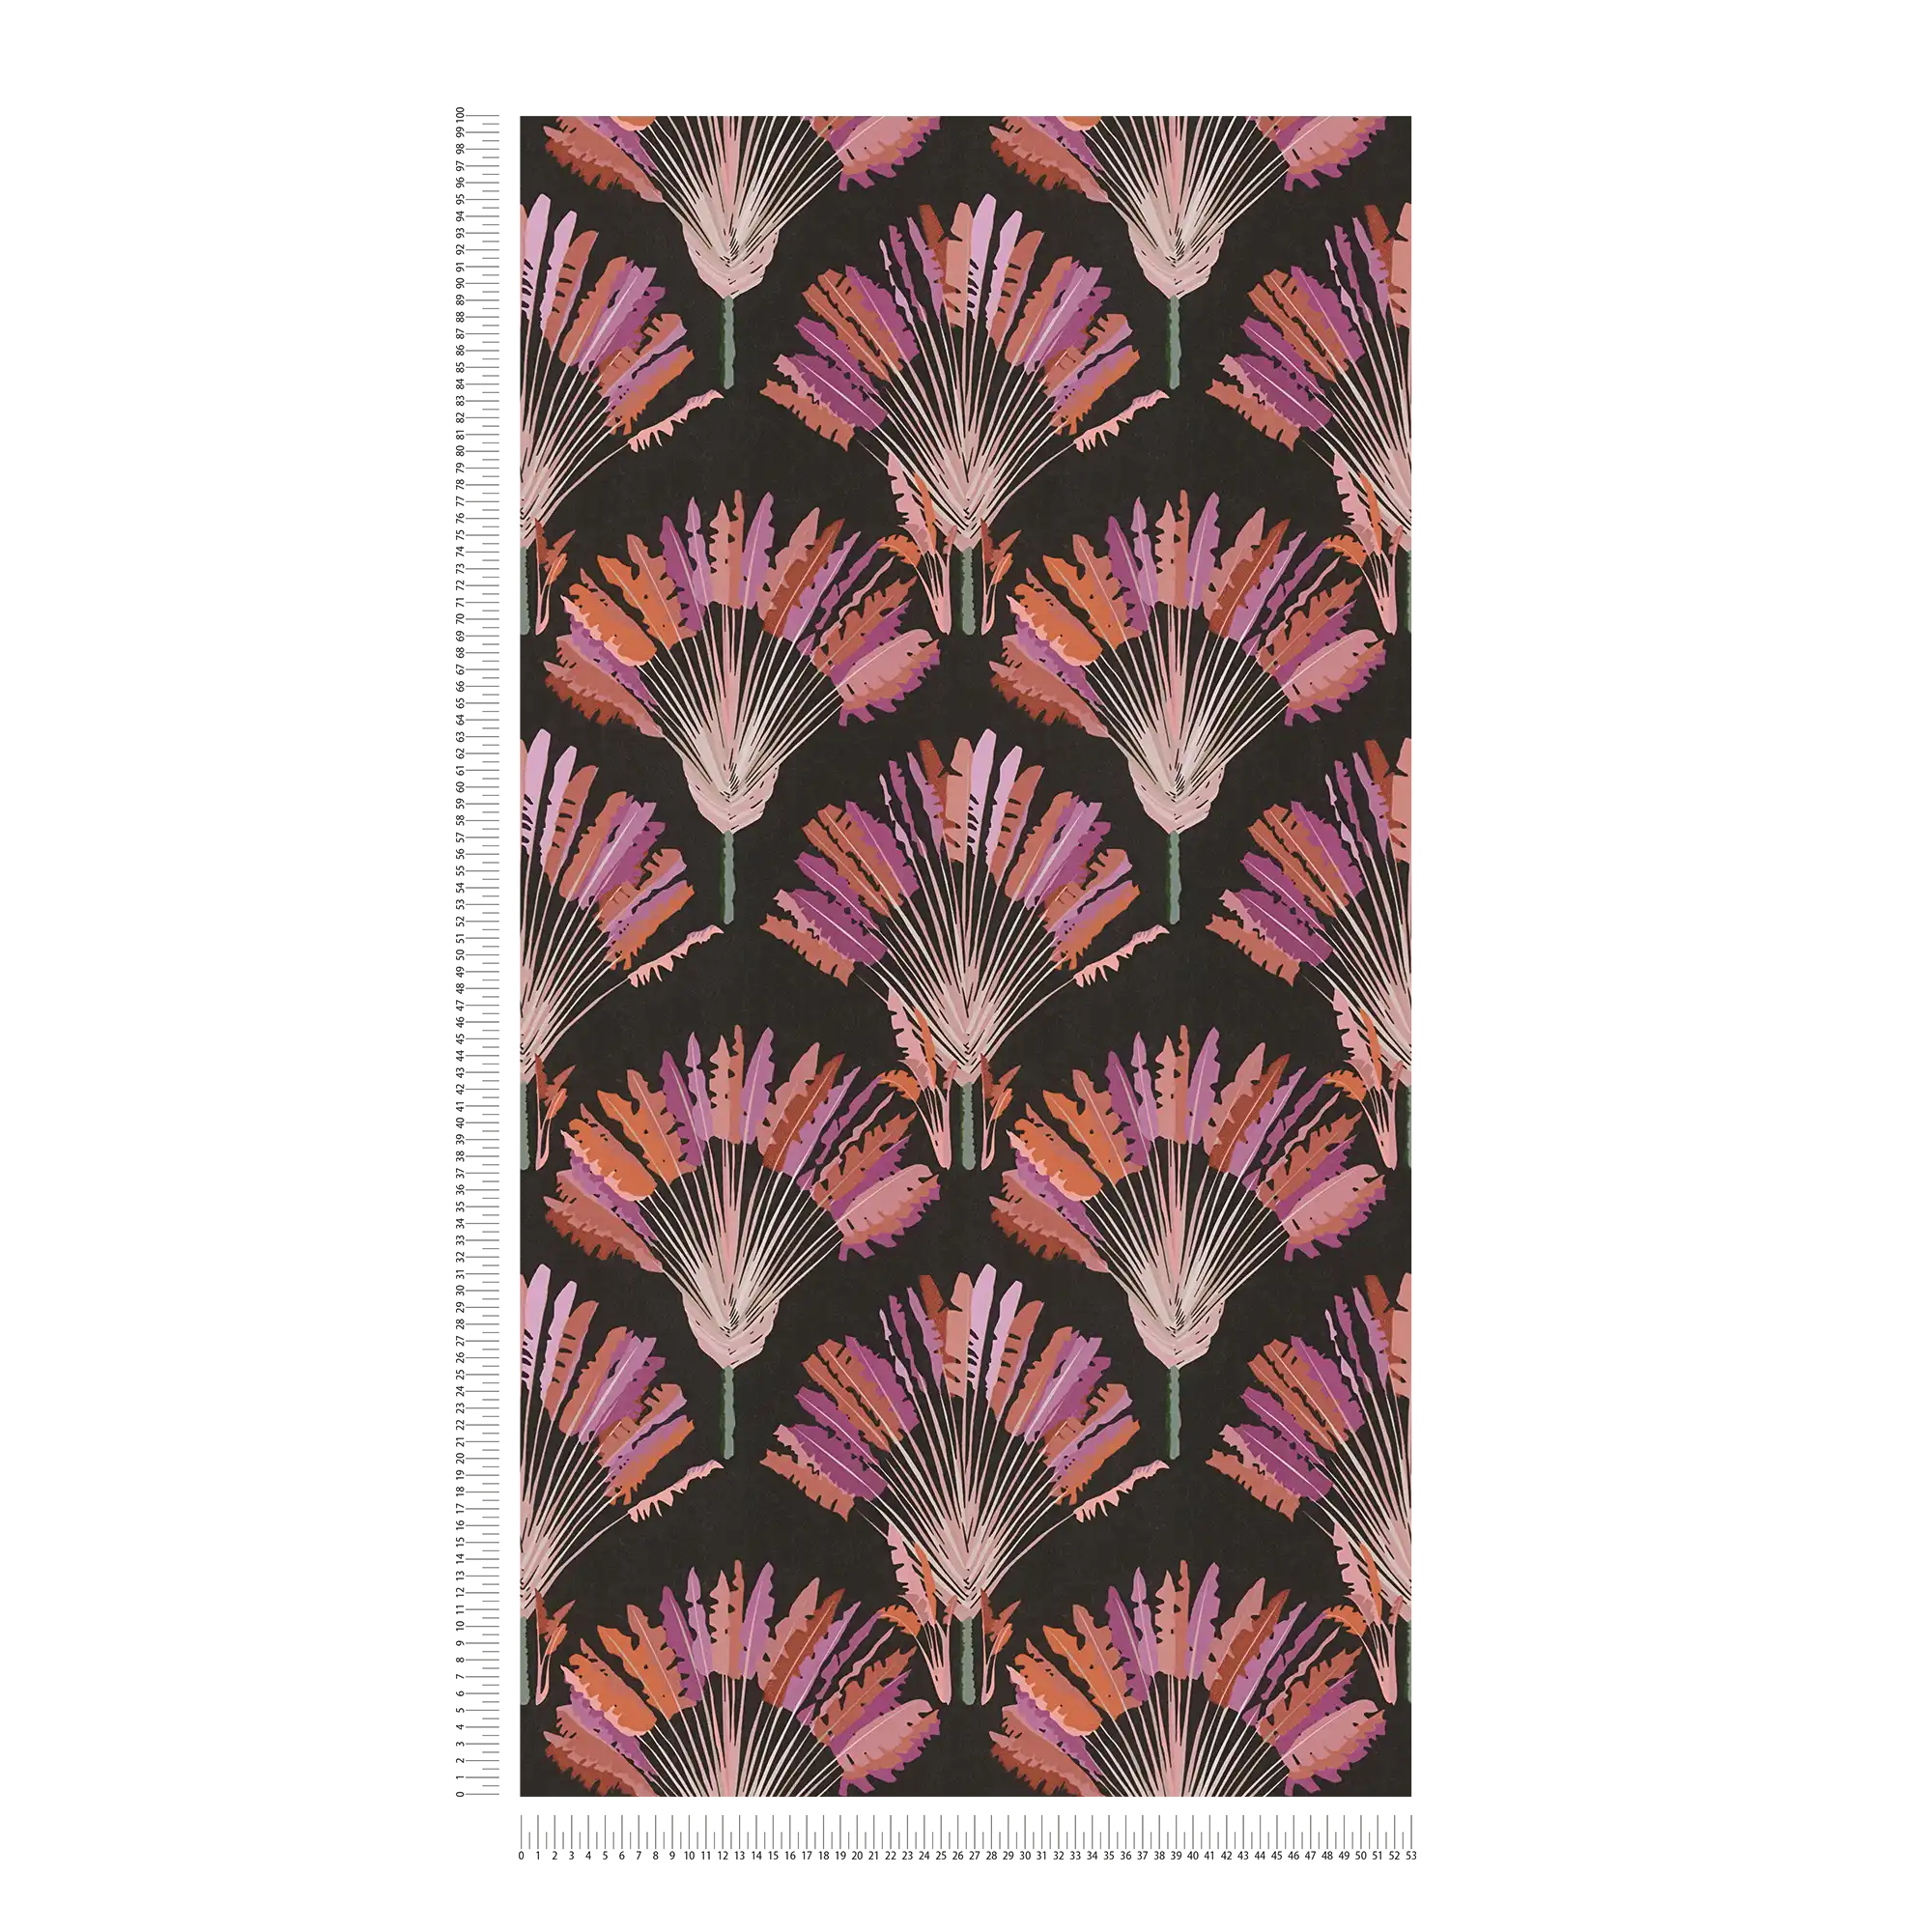             Schwarze Tapete mit violettem Palmen Muster
        